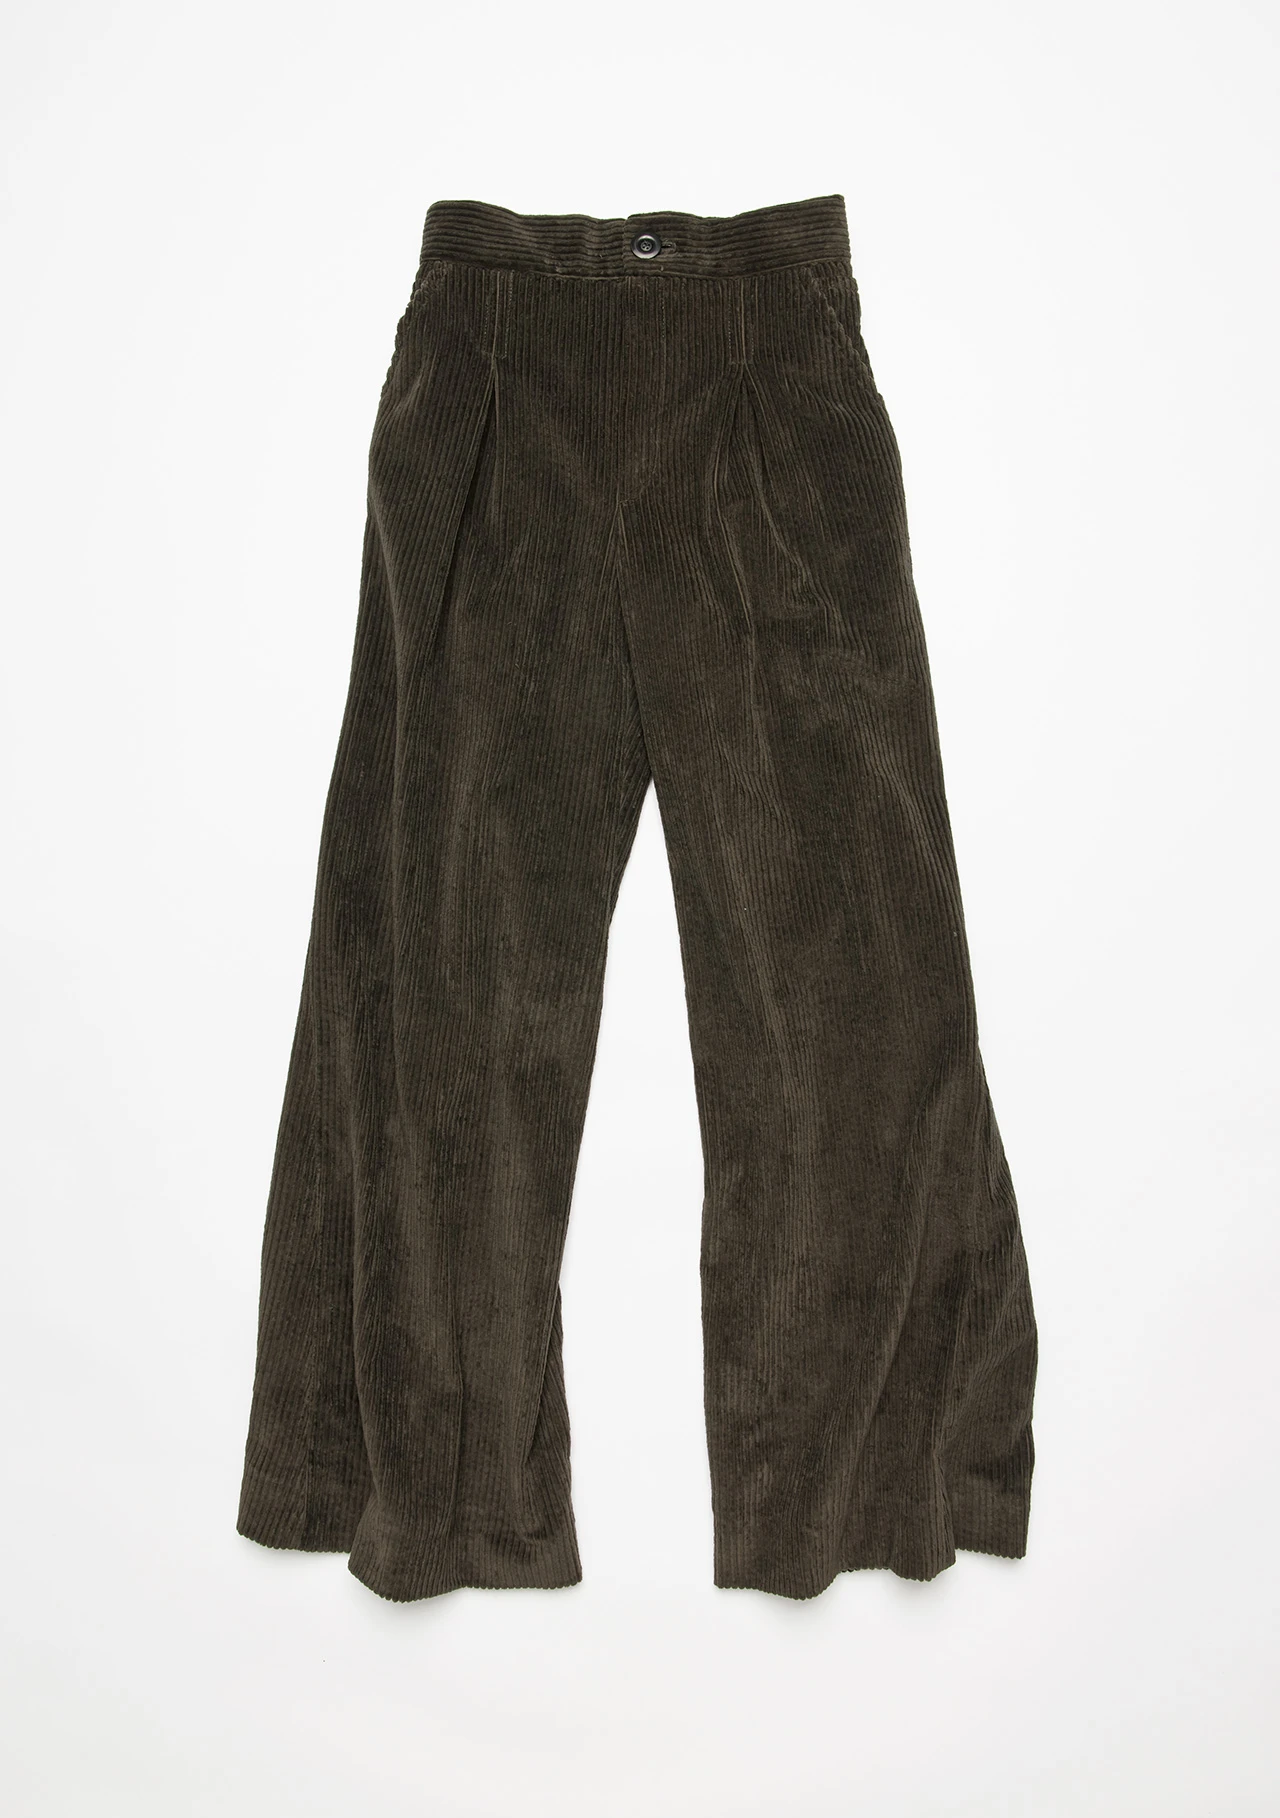 miista-lorelei-brown-trousers-01-cp